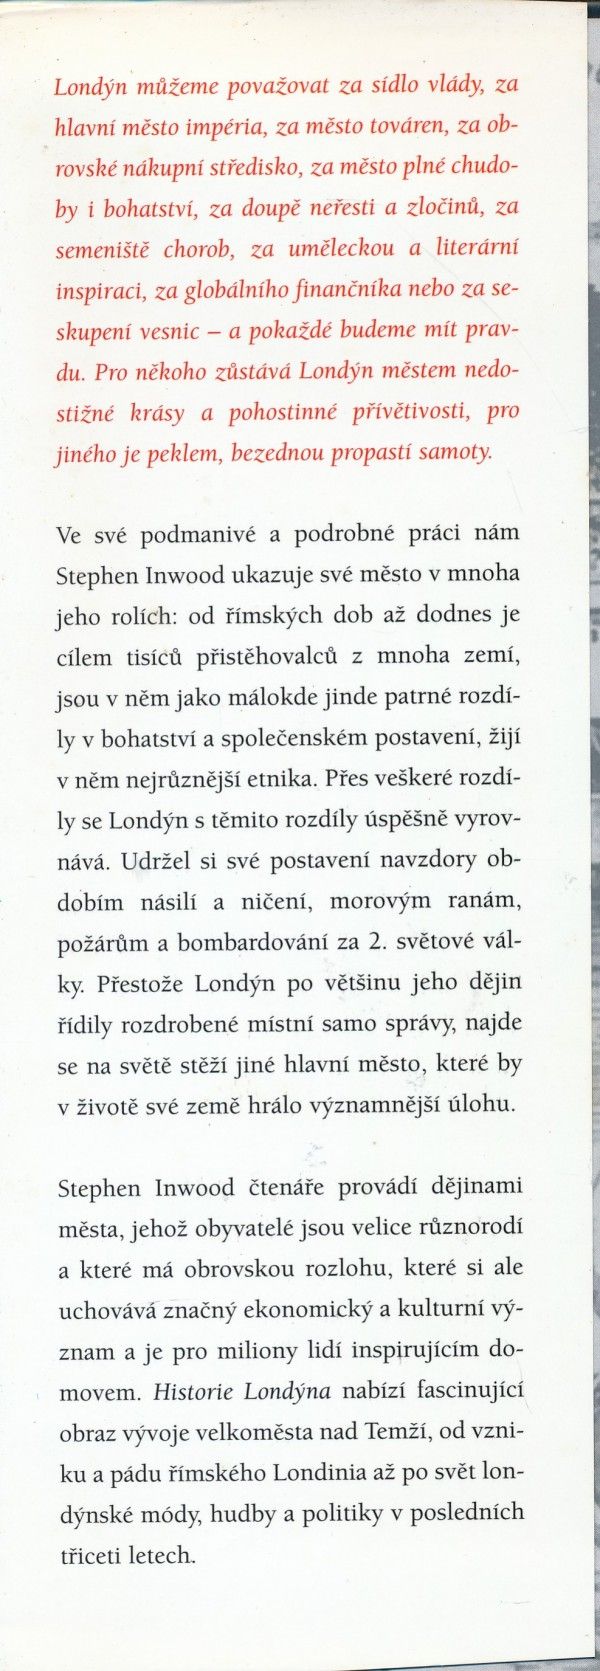 Stephen Inwood: HISTORIE LONDÝNA